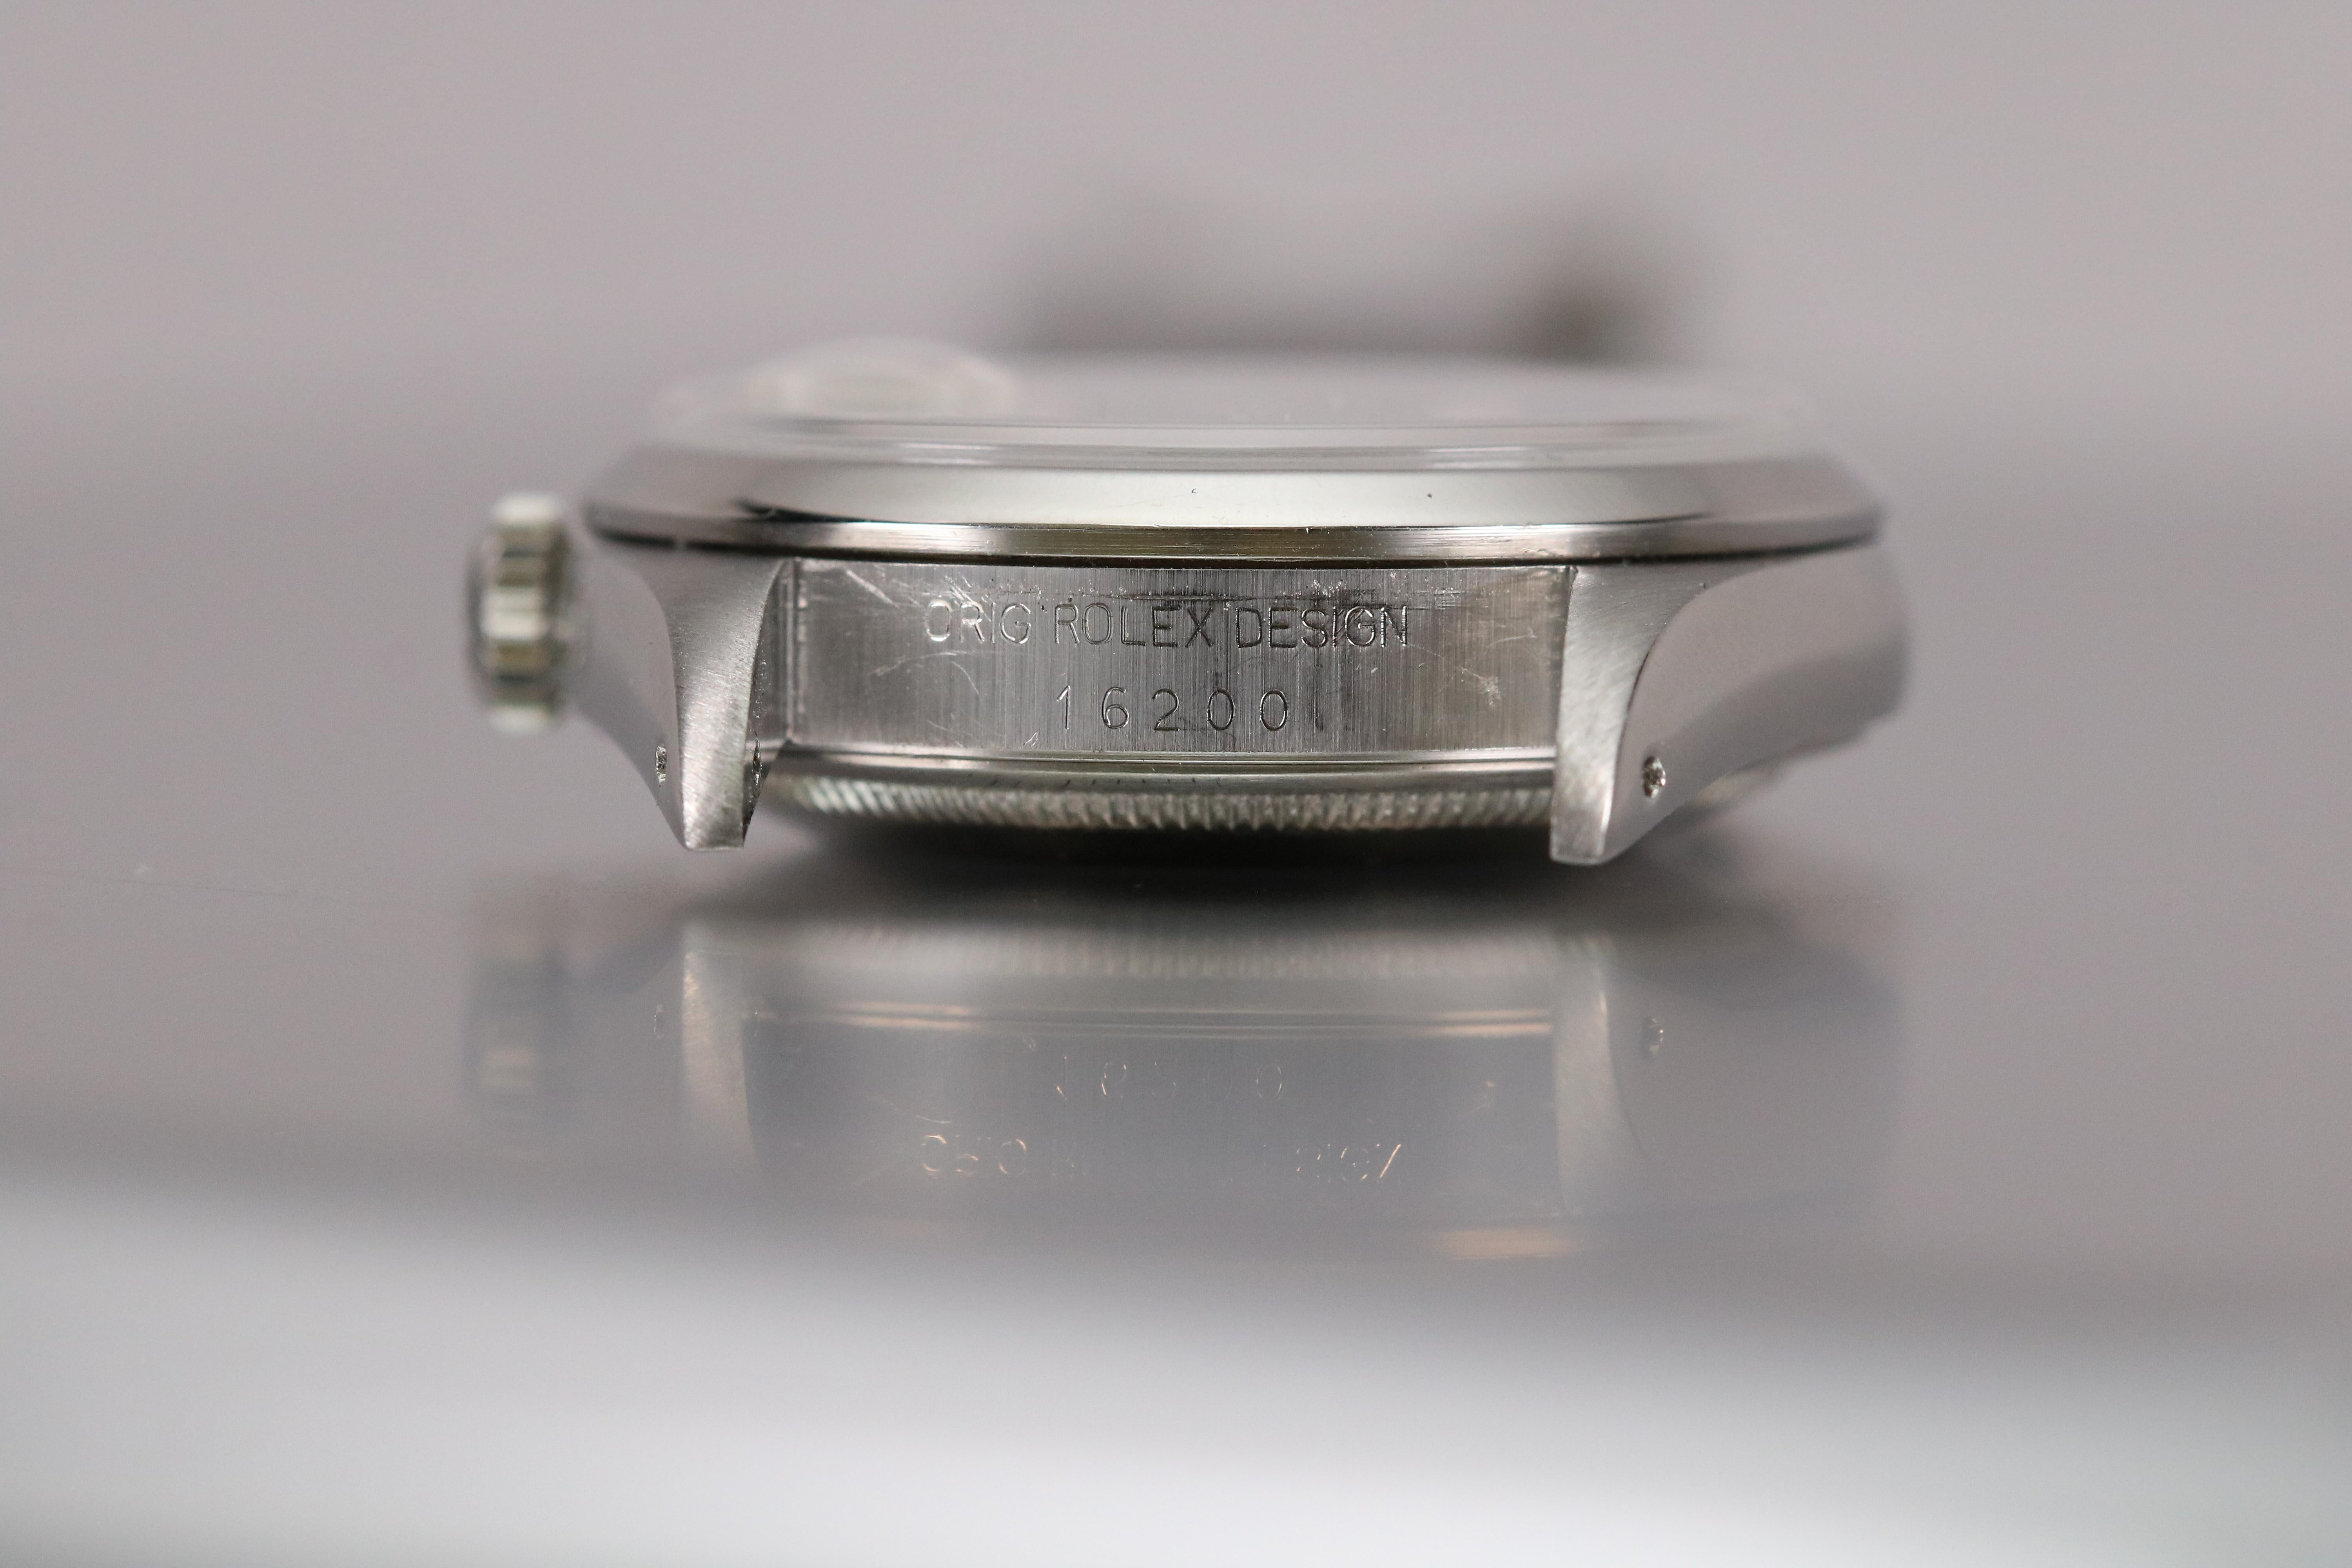 Rolex Stainless Steel Datejust Automatic Wristwatch Ref 16200, circa 1991 5